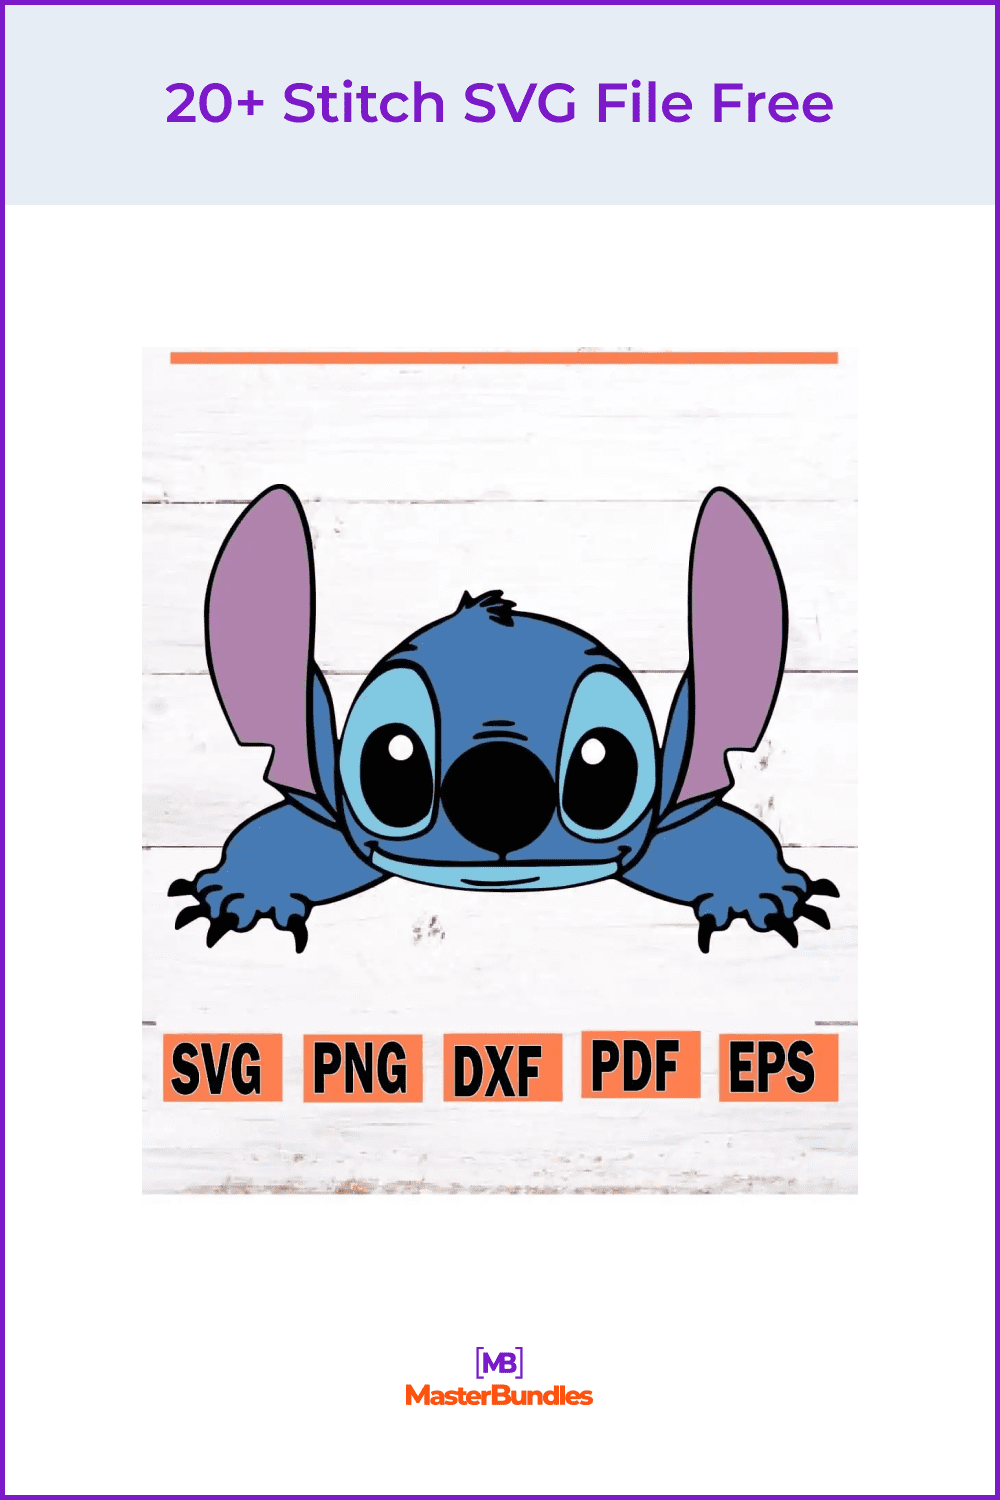 20+ Stitch SVG File Free.